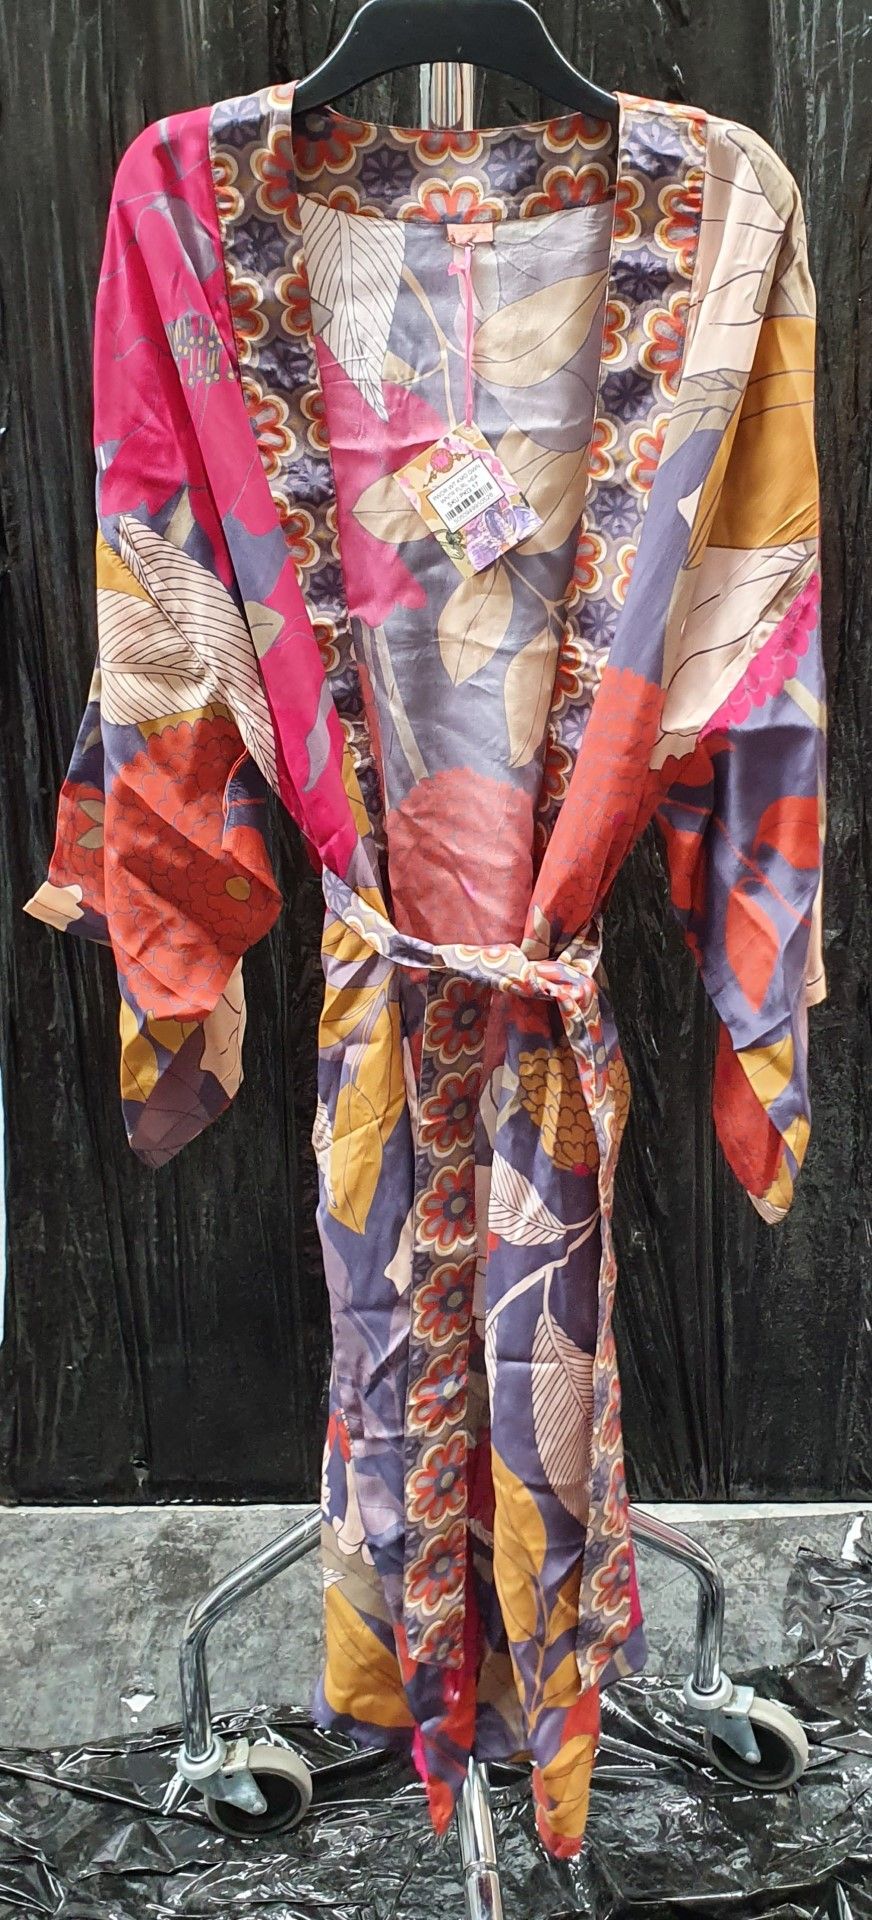 6 x Powder Kimono Style Gowns and 1 x Scarf - Folk Art Petal Finish 100% Viscose Fabric - Adult - Image 22 of 22